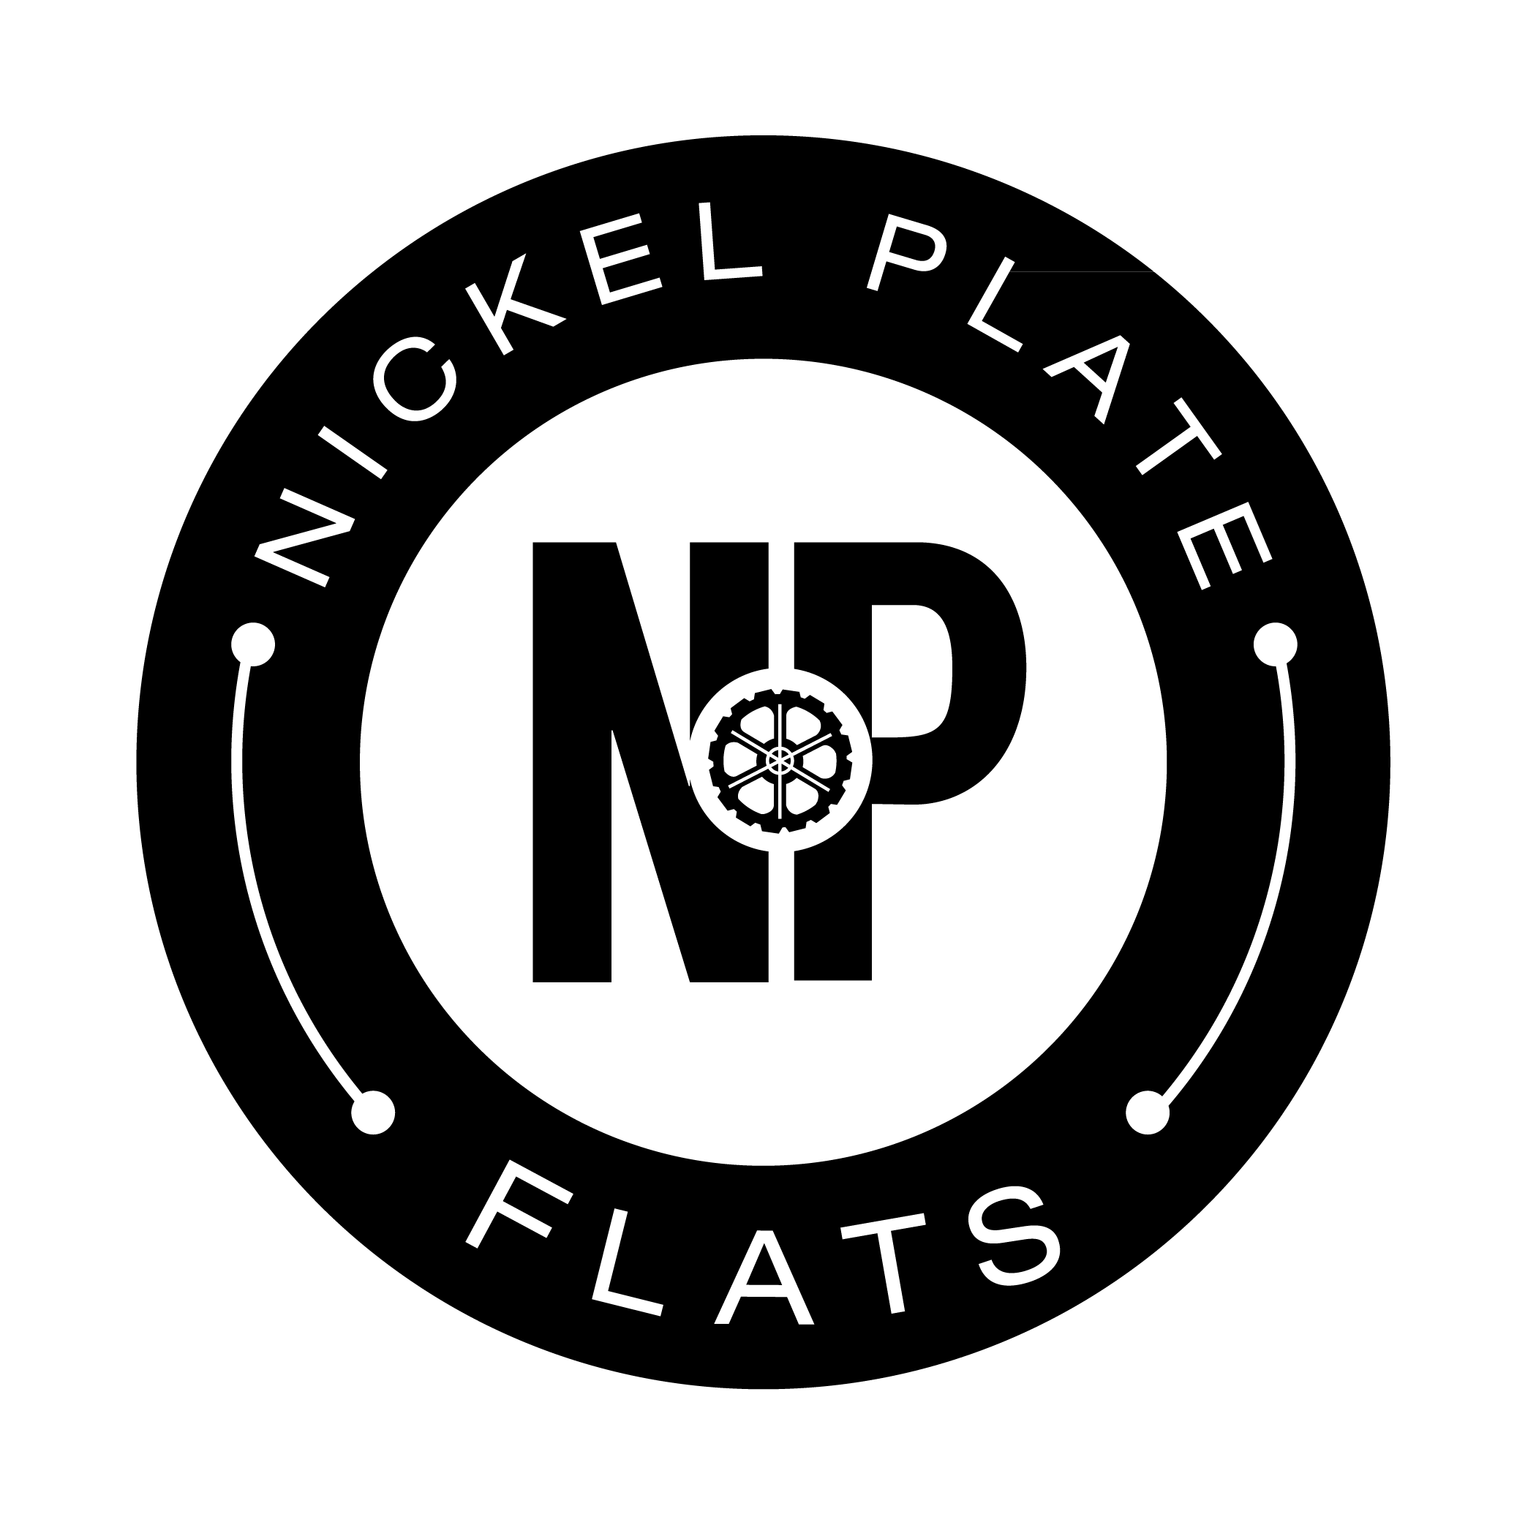 Nickel Plate Flats